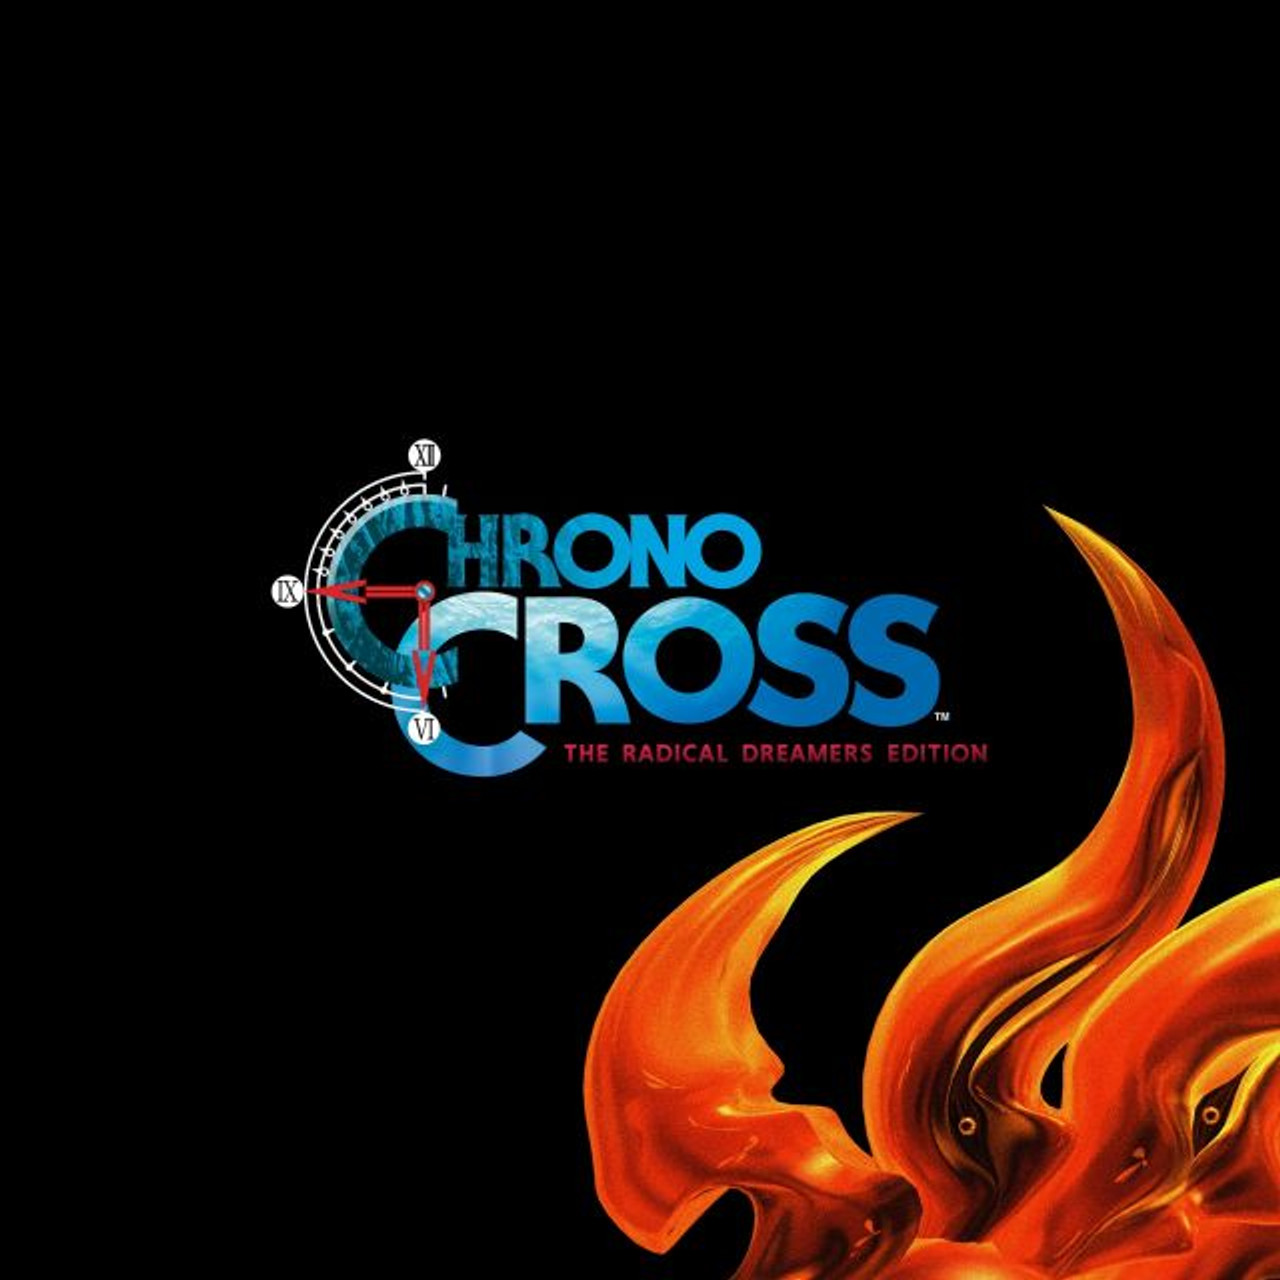 Chrono Cross on X: Chrono Cross: The Radical Dreamers Edition not